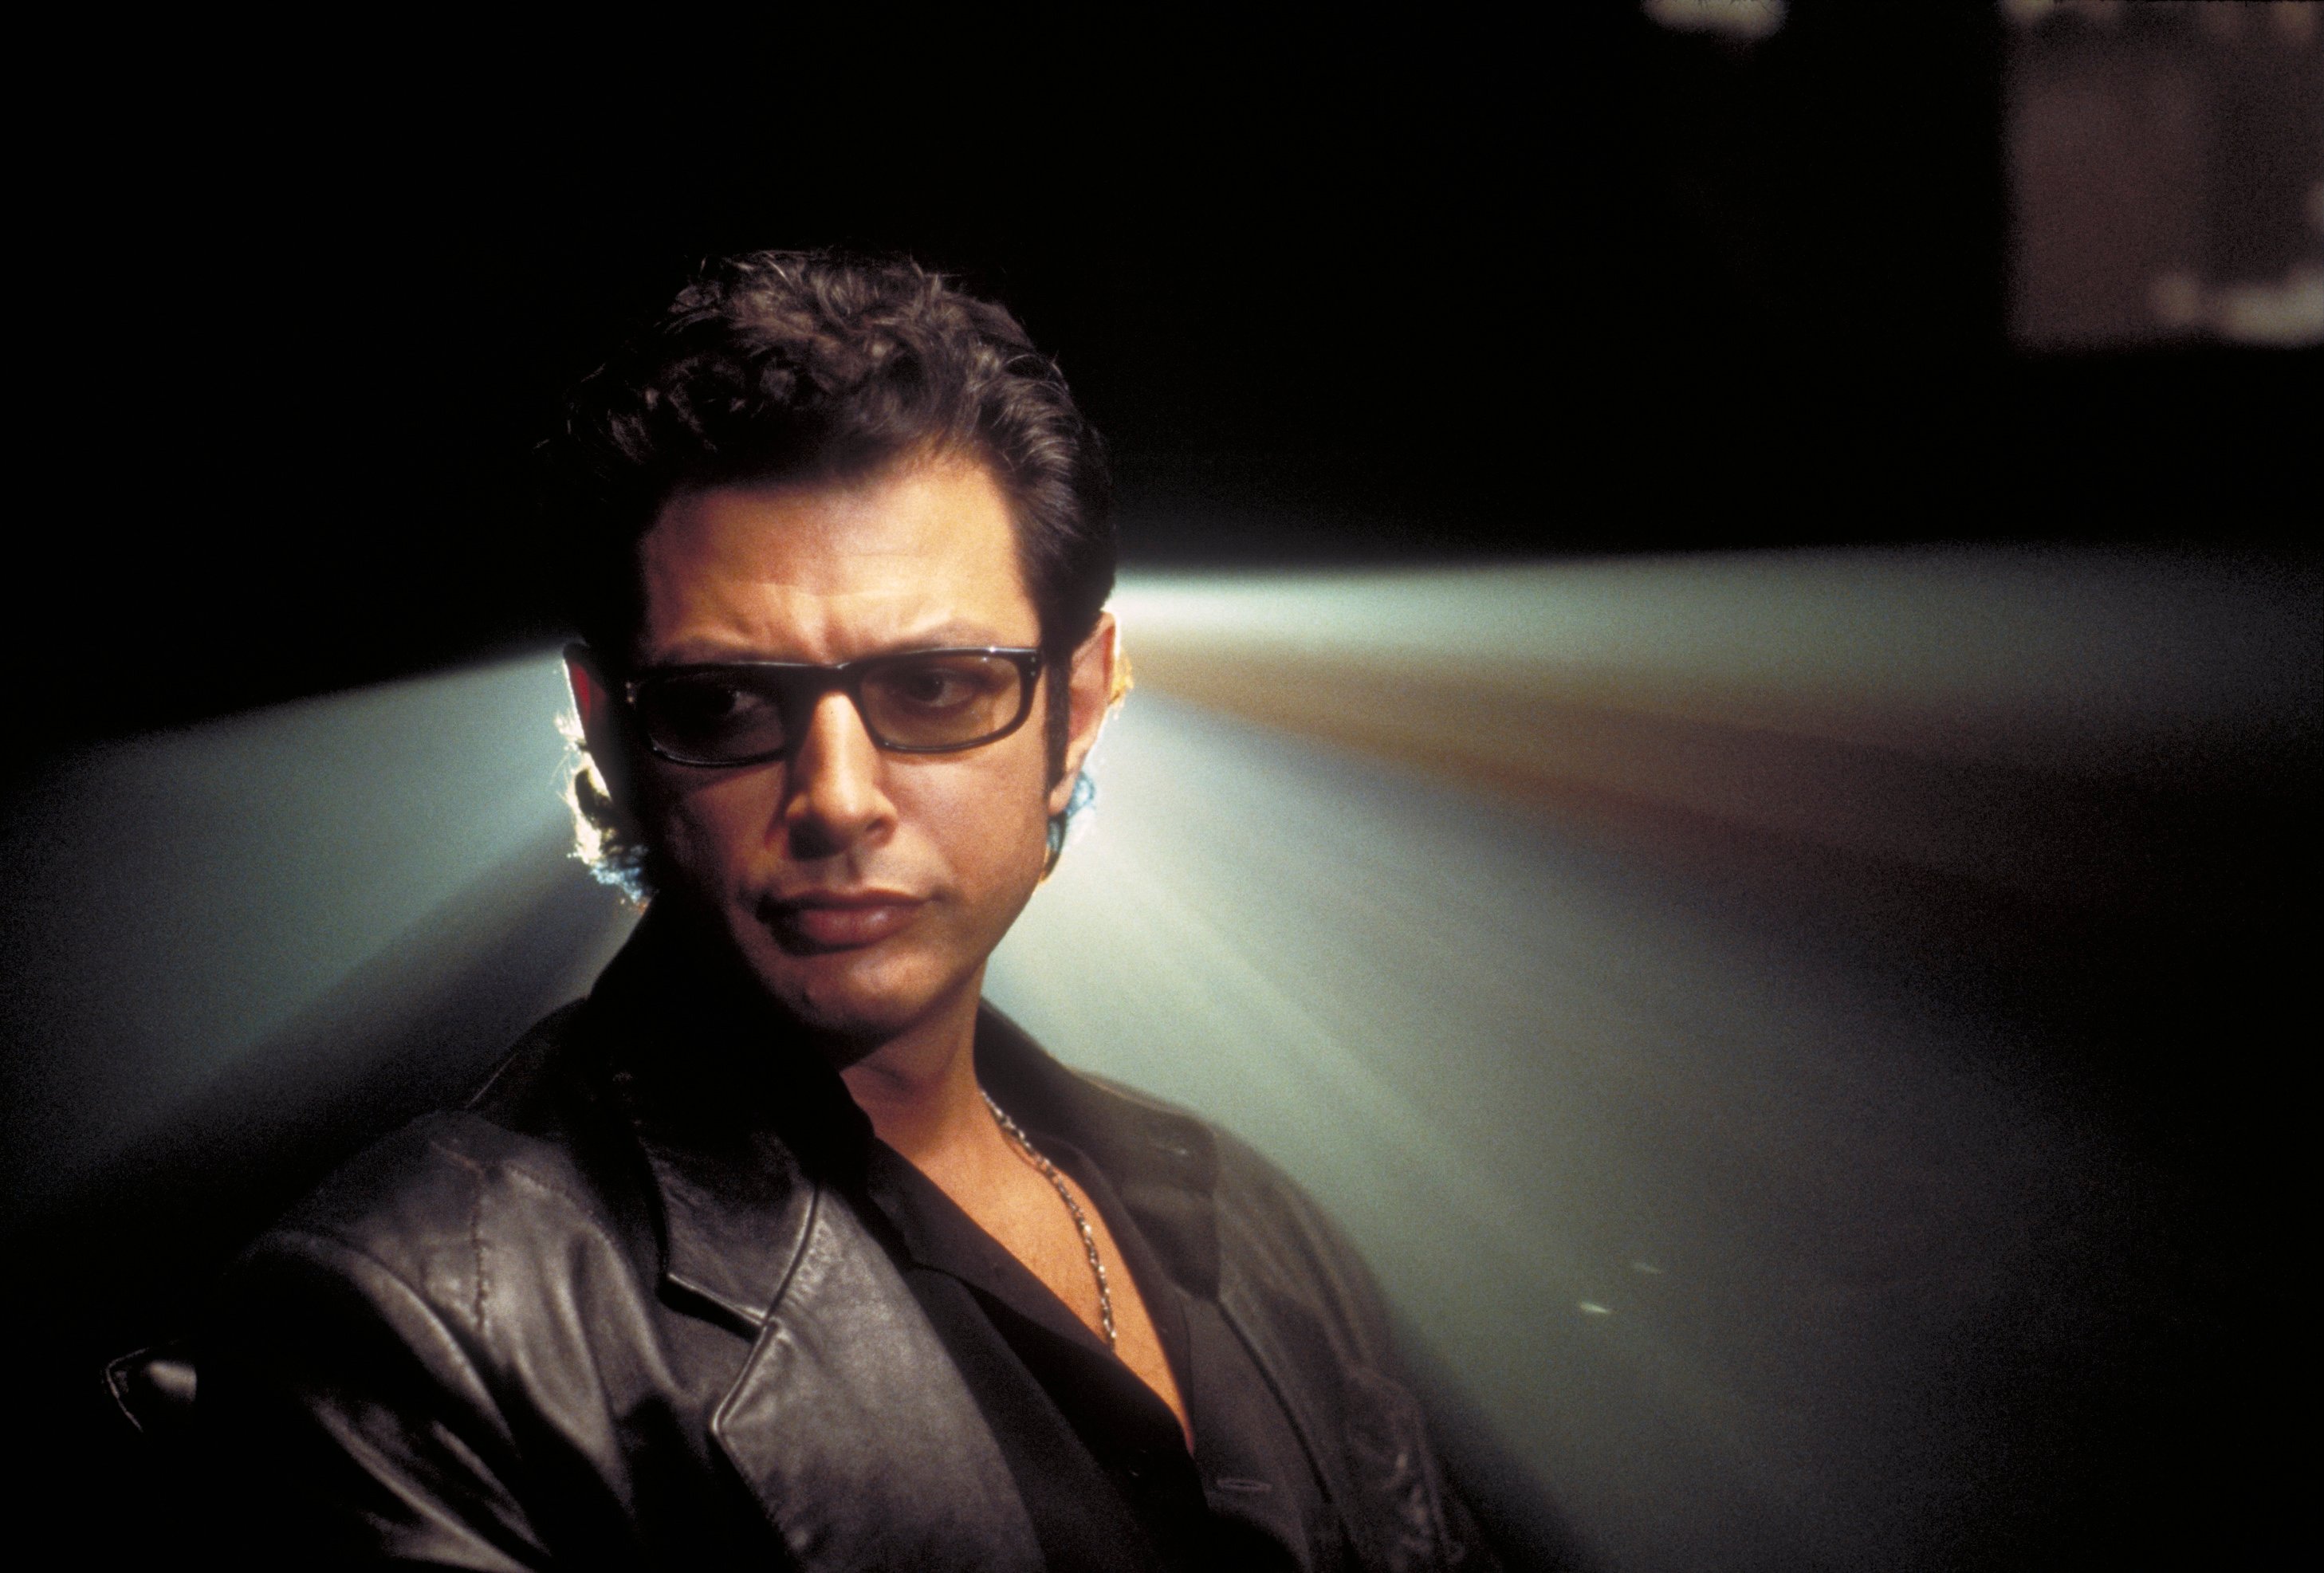 Jeff Goldblum plays Ian Malcolm in the Steven Spielberg movie Jurassic Park